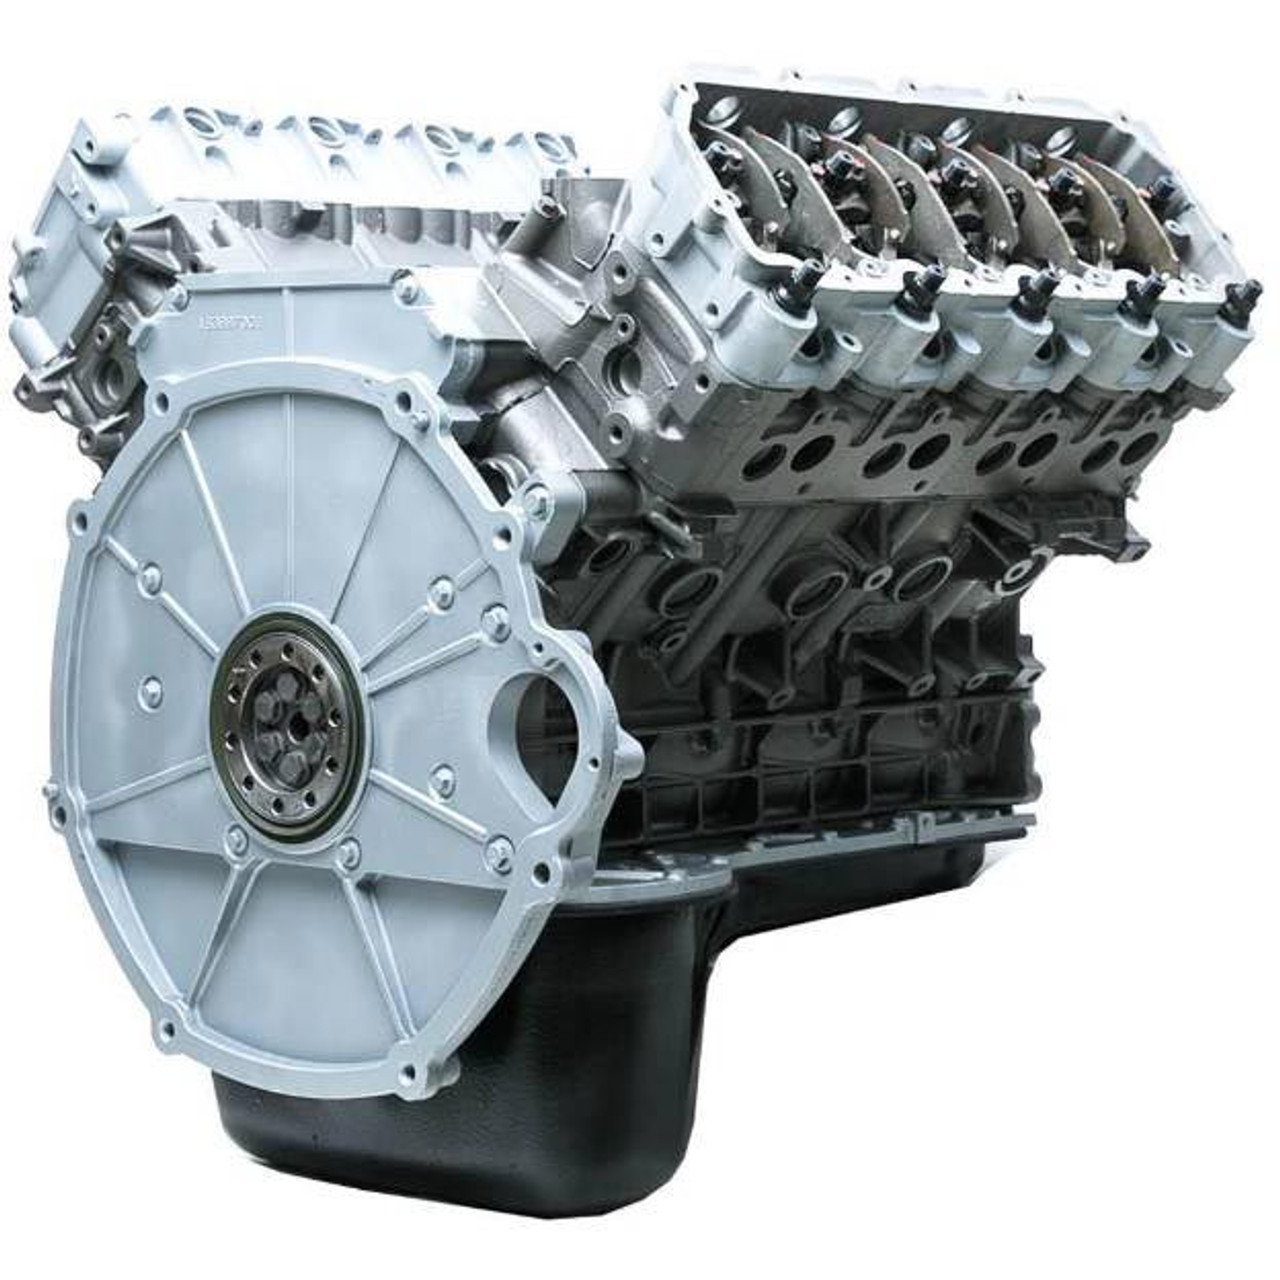 DFC Diesel 6.0 Powerstroke Engine